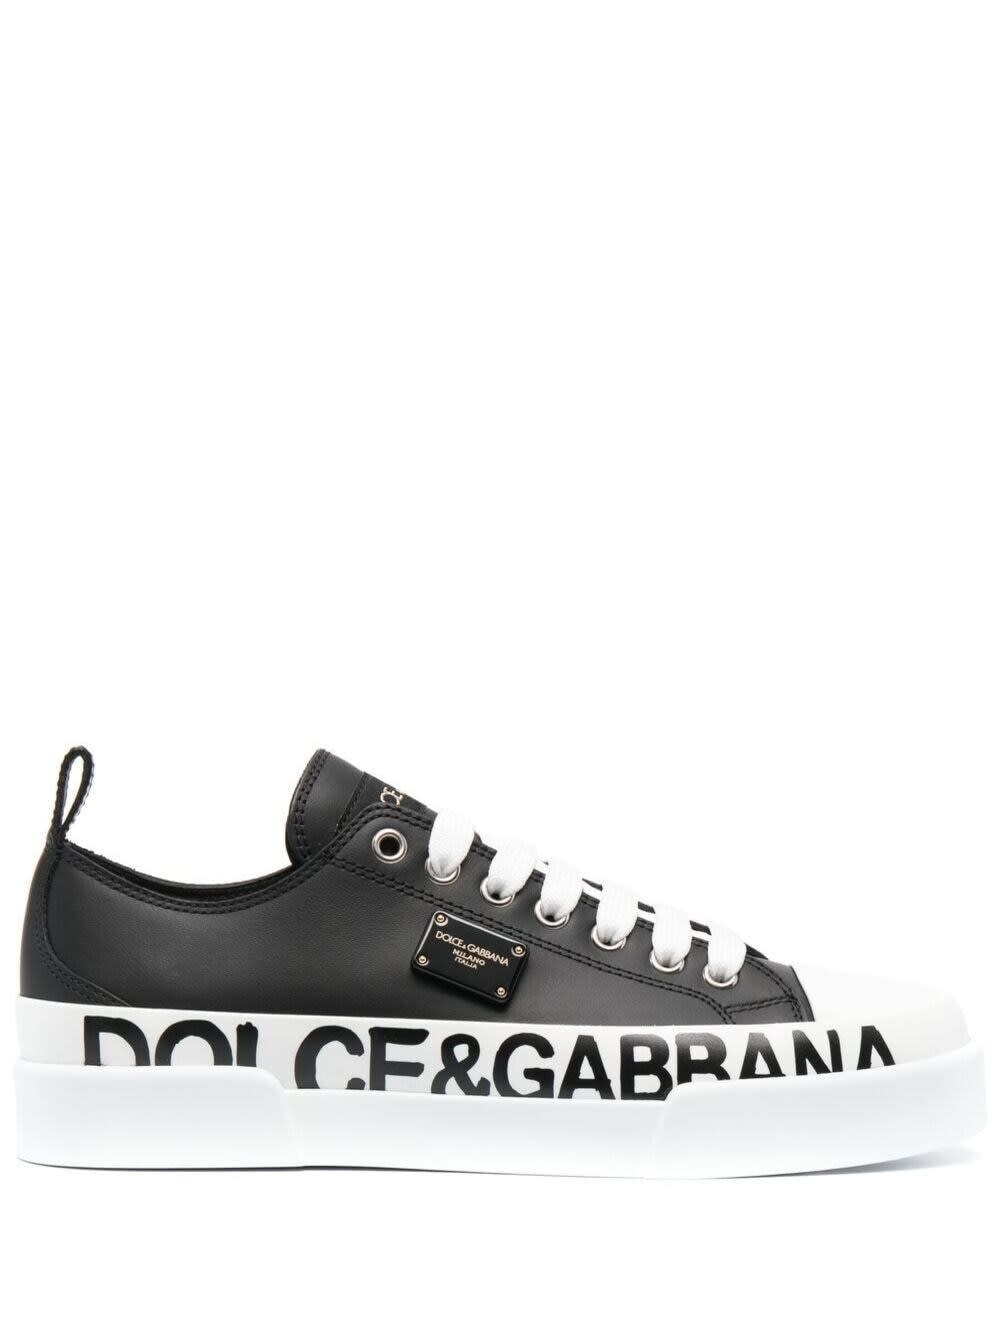 Buy Dolce & Gabbana Portofino Light Sneaker online, shop Dolce & Gabbana shoes with free shipping